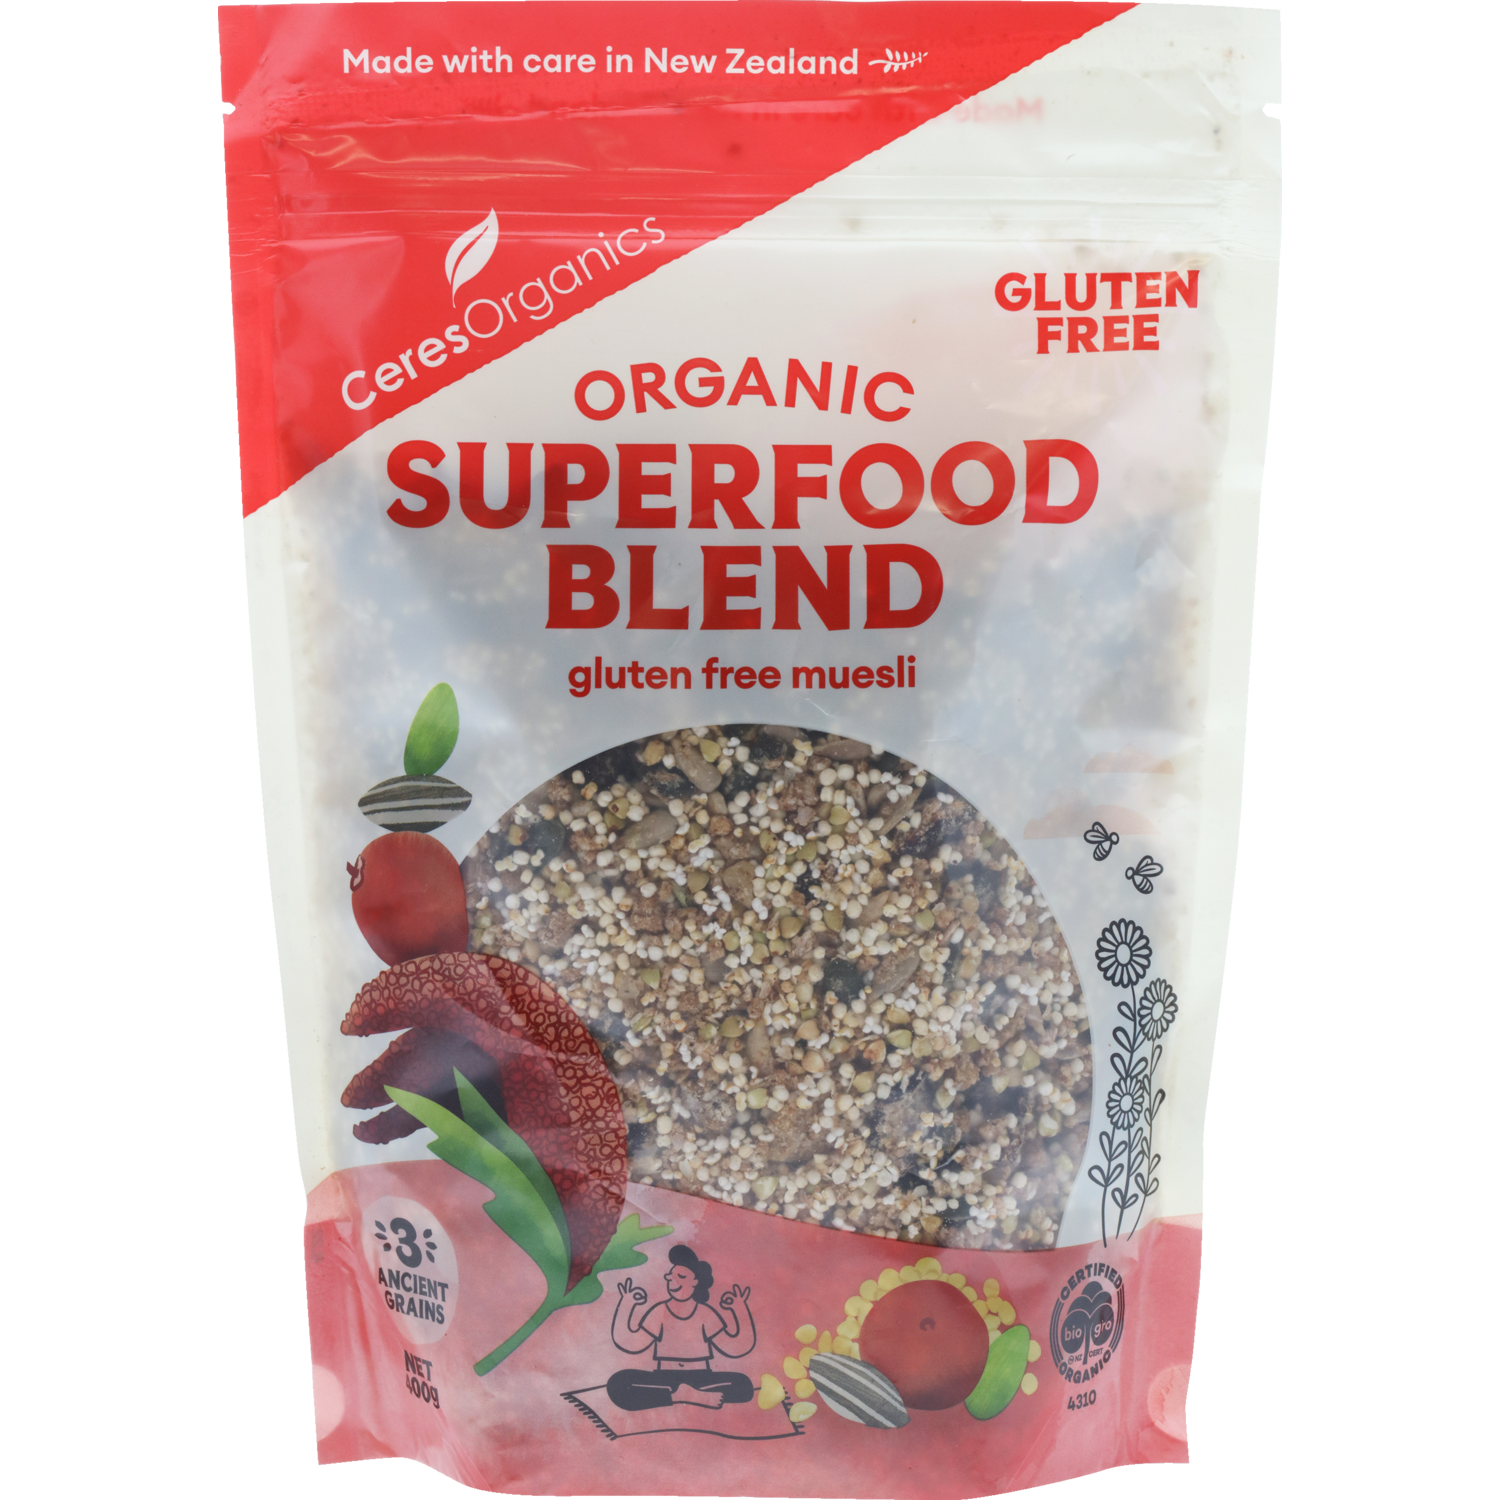 Organic Superfruit Muesli (375g) — TEMBO FOODS